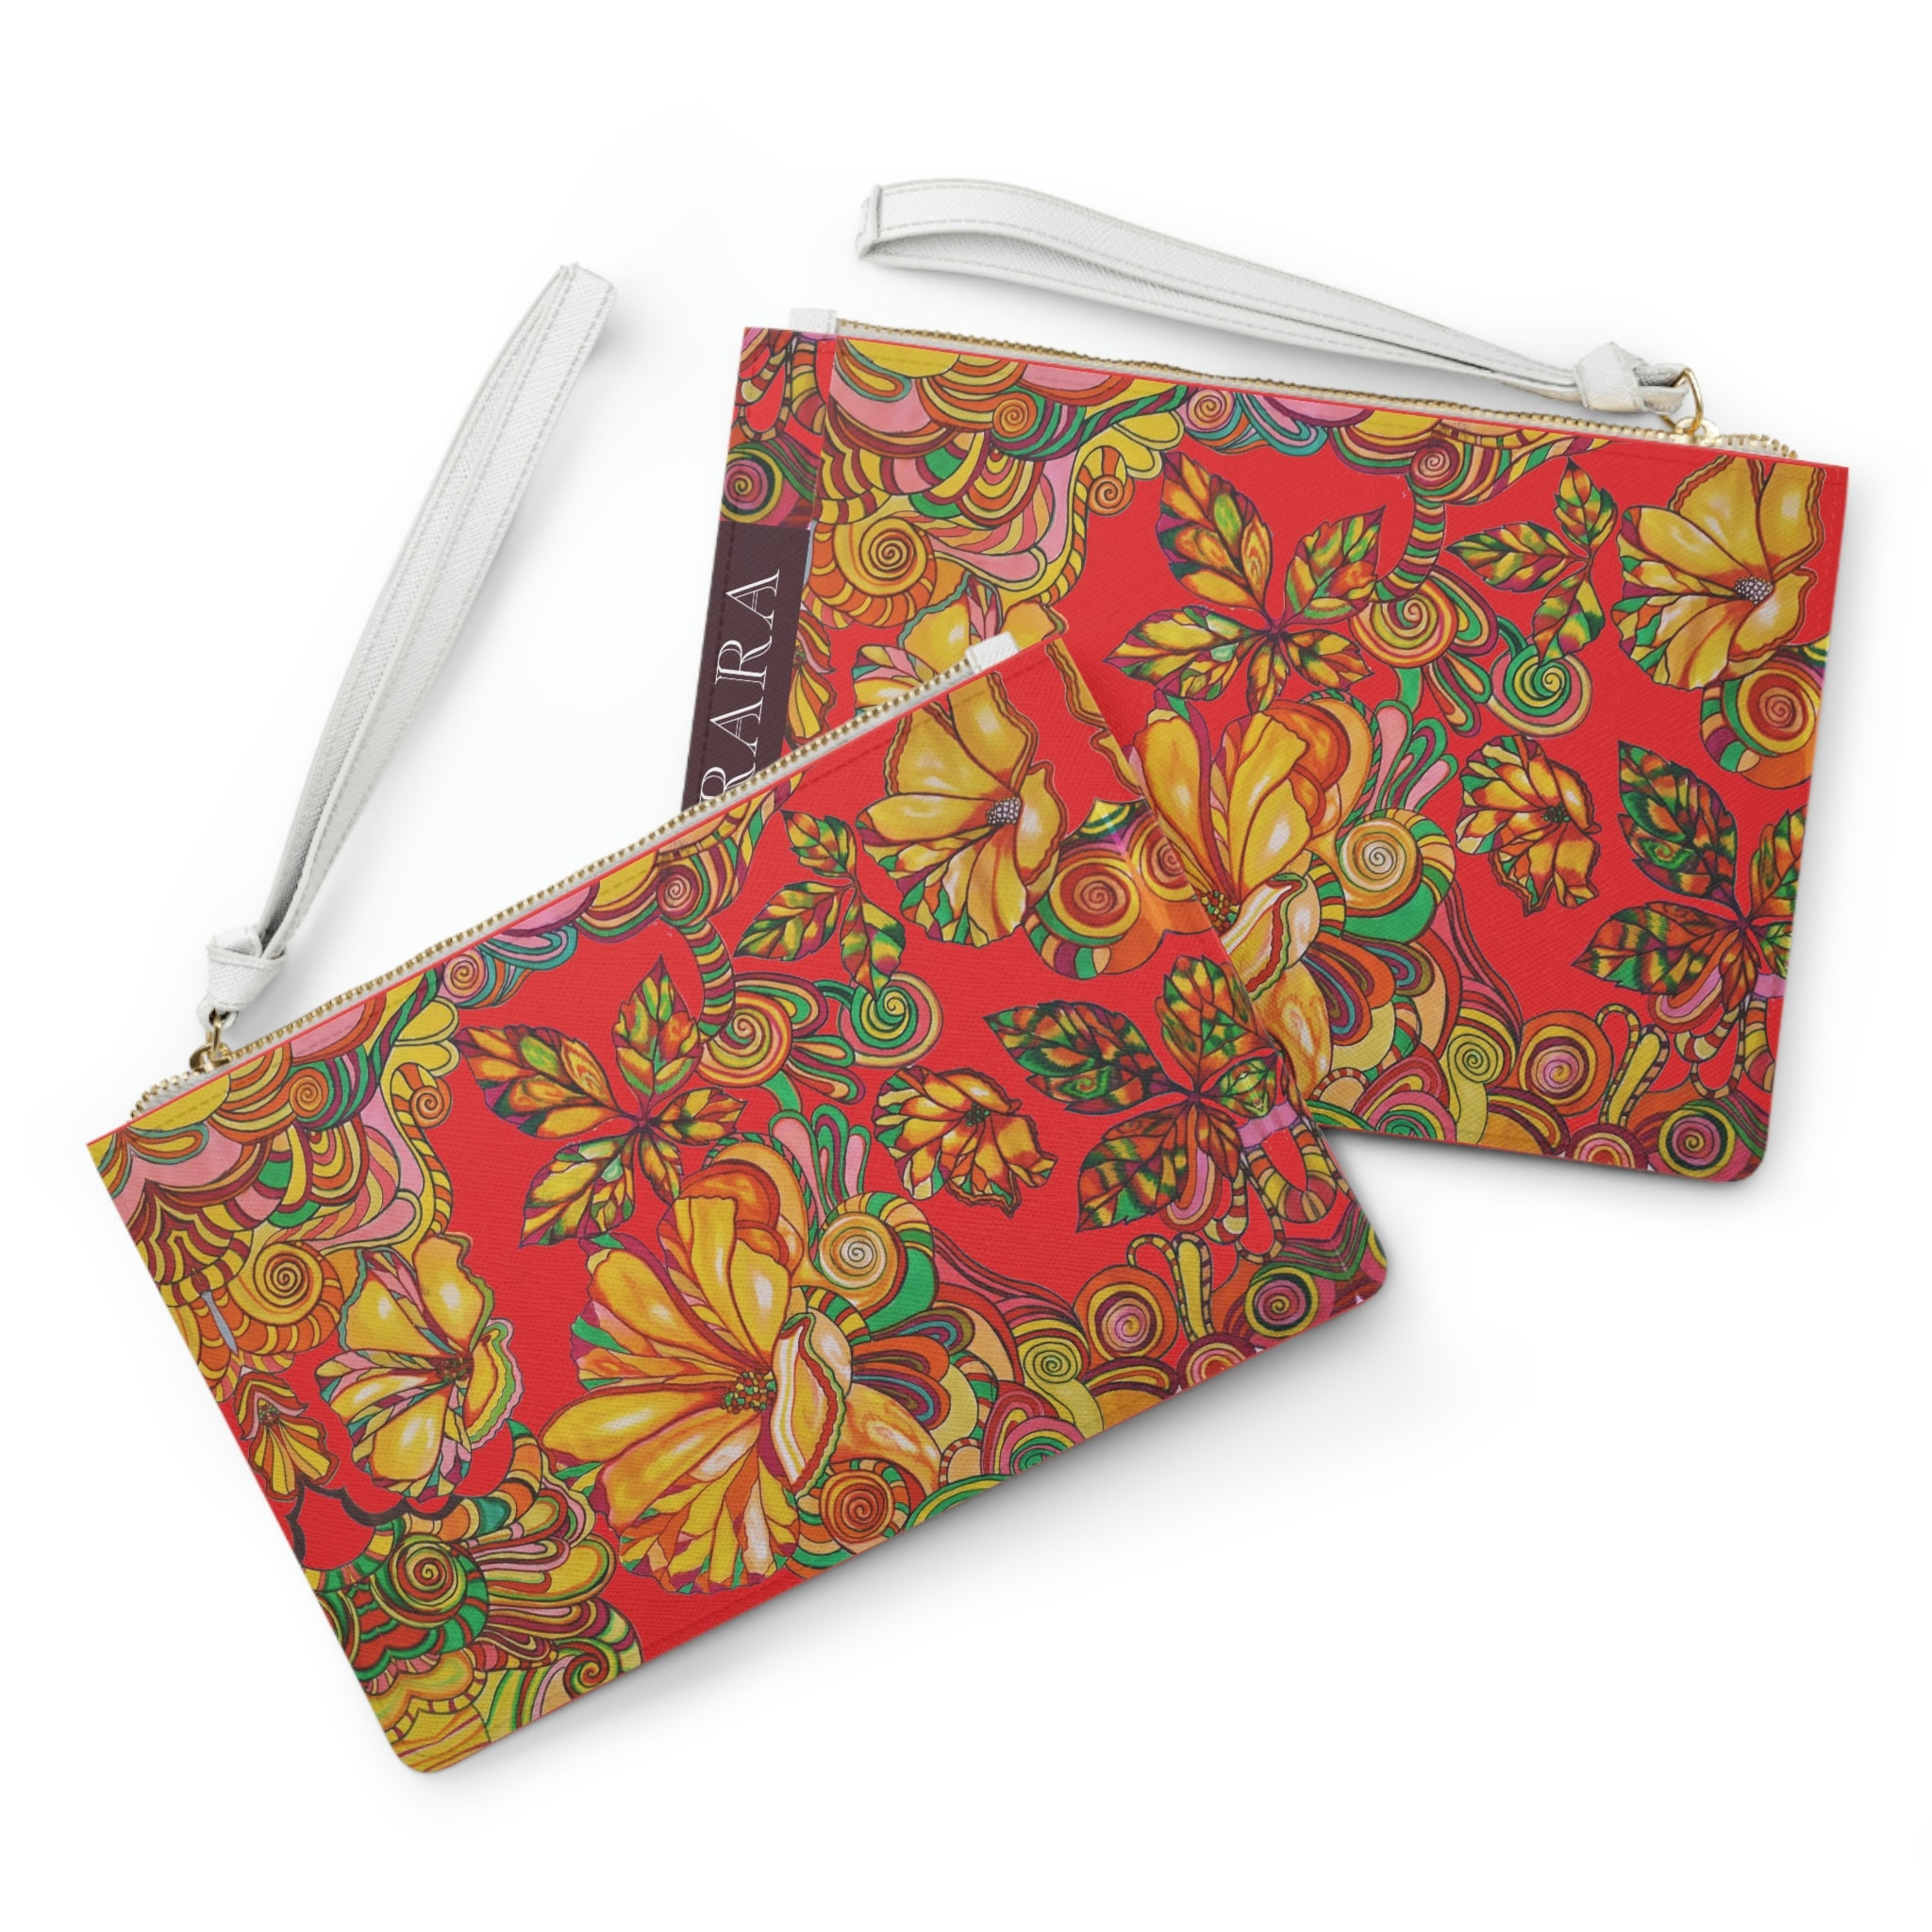 Red Artsy Floral Clutch Bag